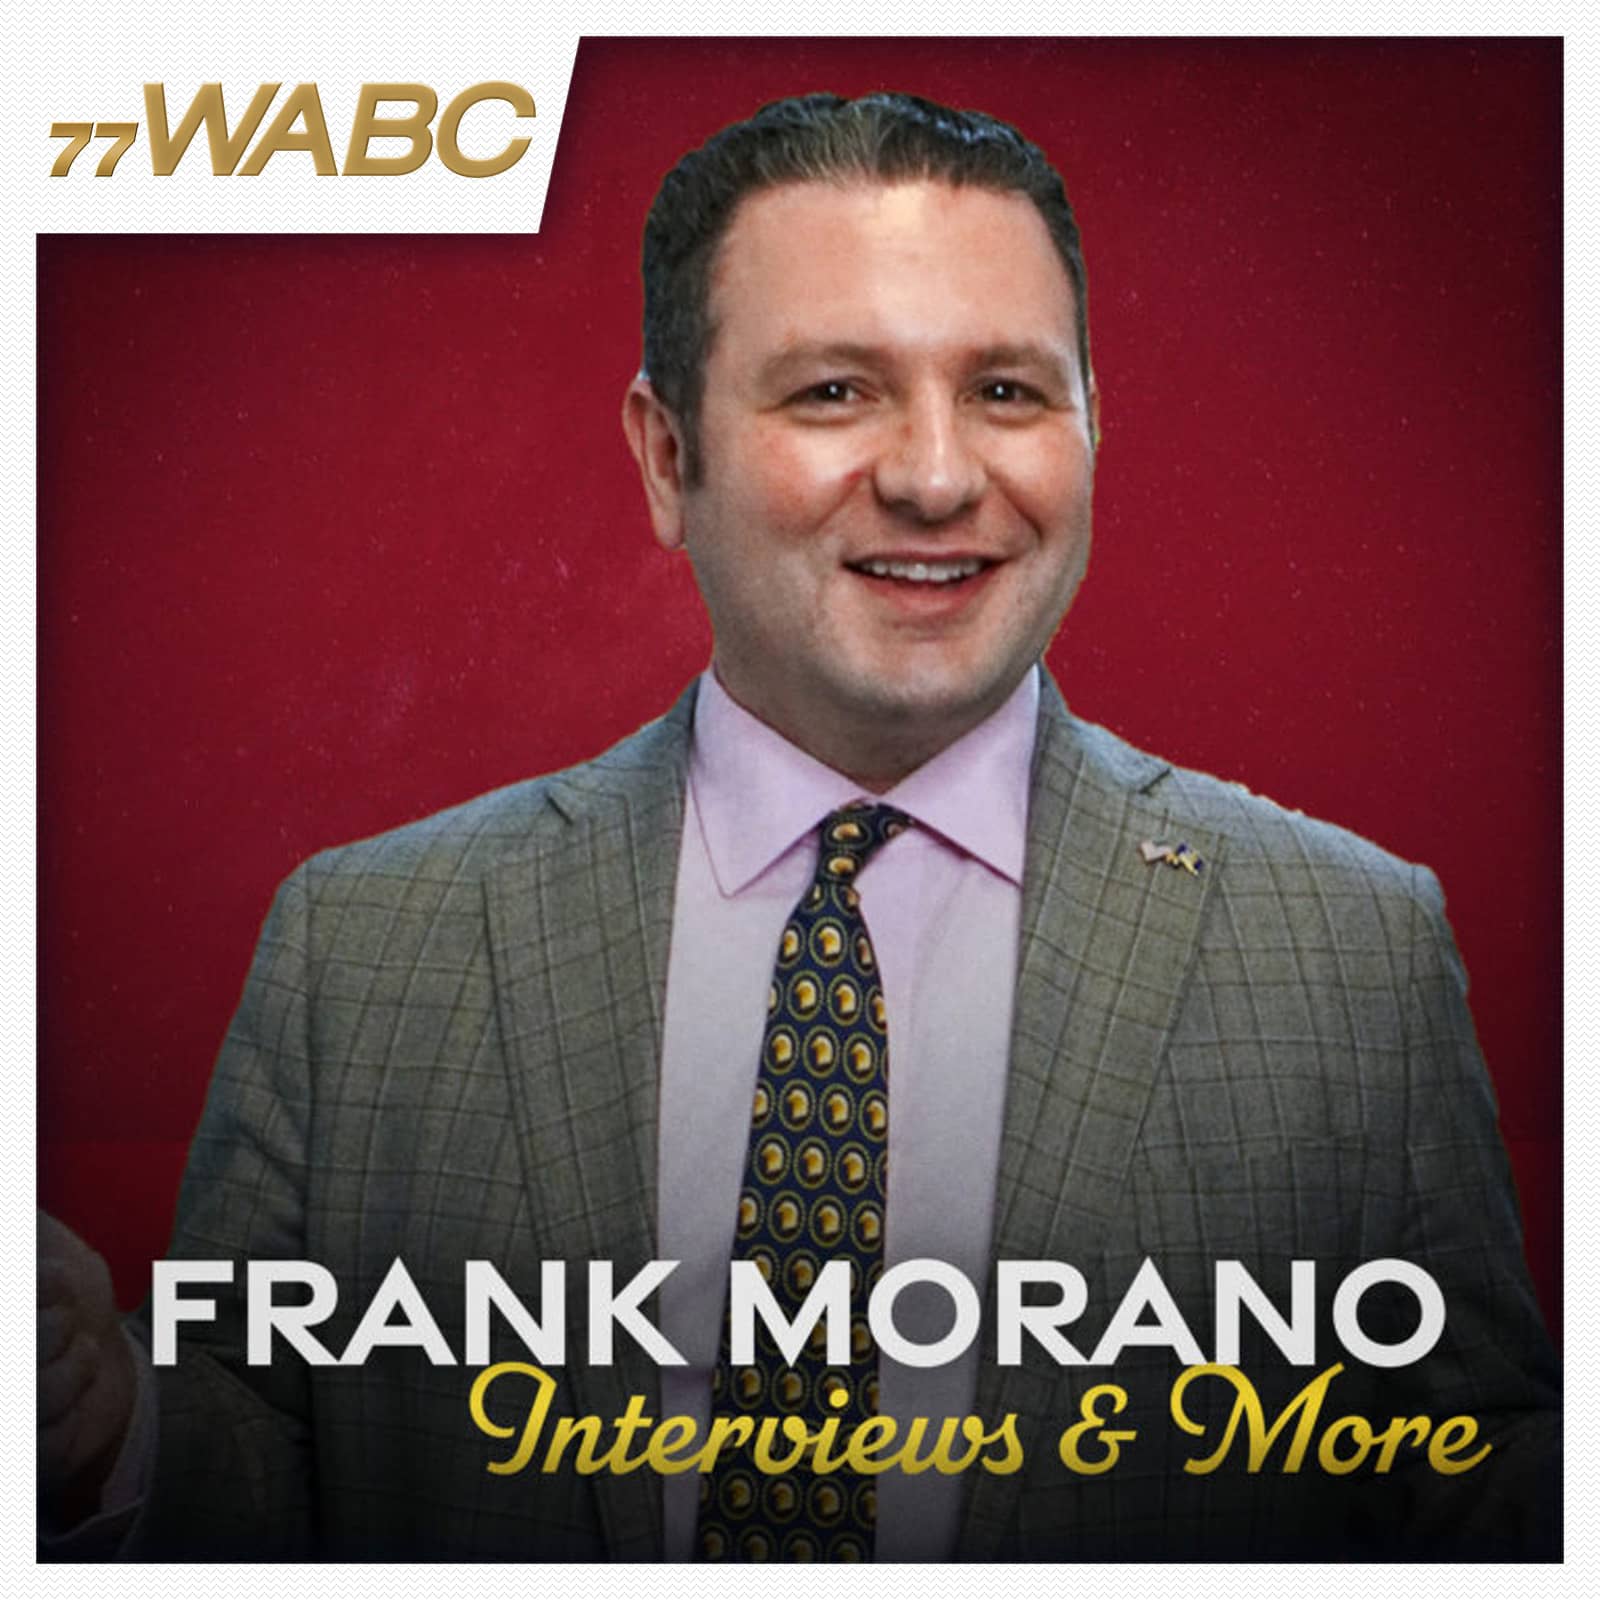 frank-morano-interviews-and-more-podcast-new-logo889155